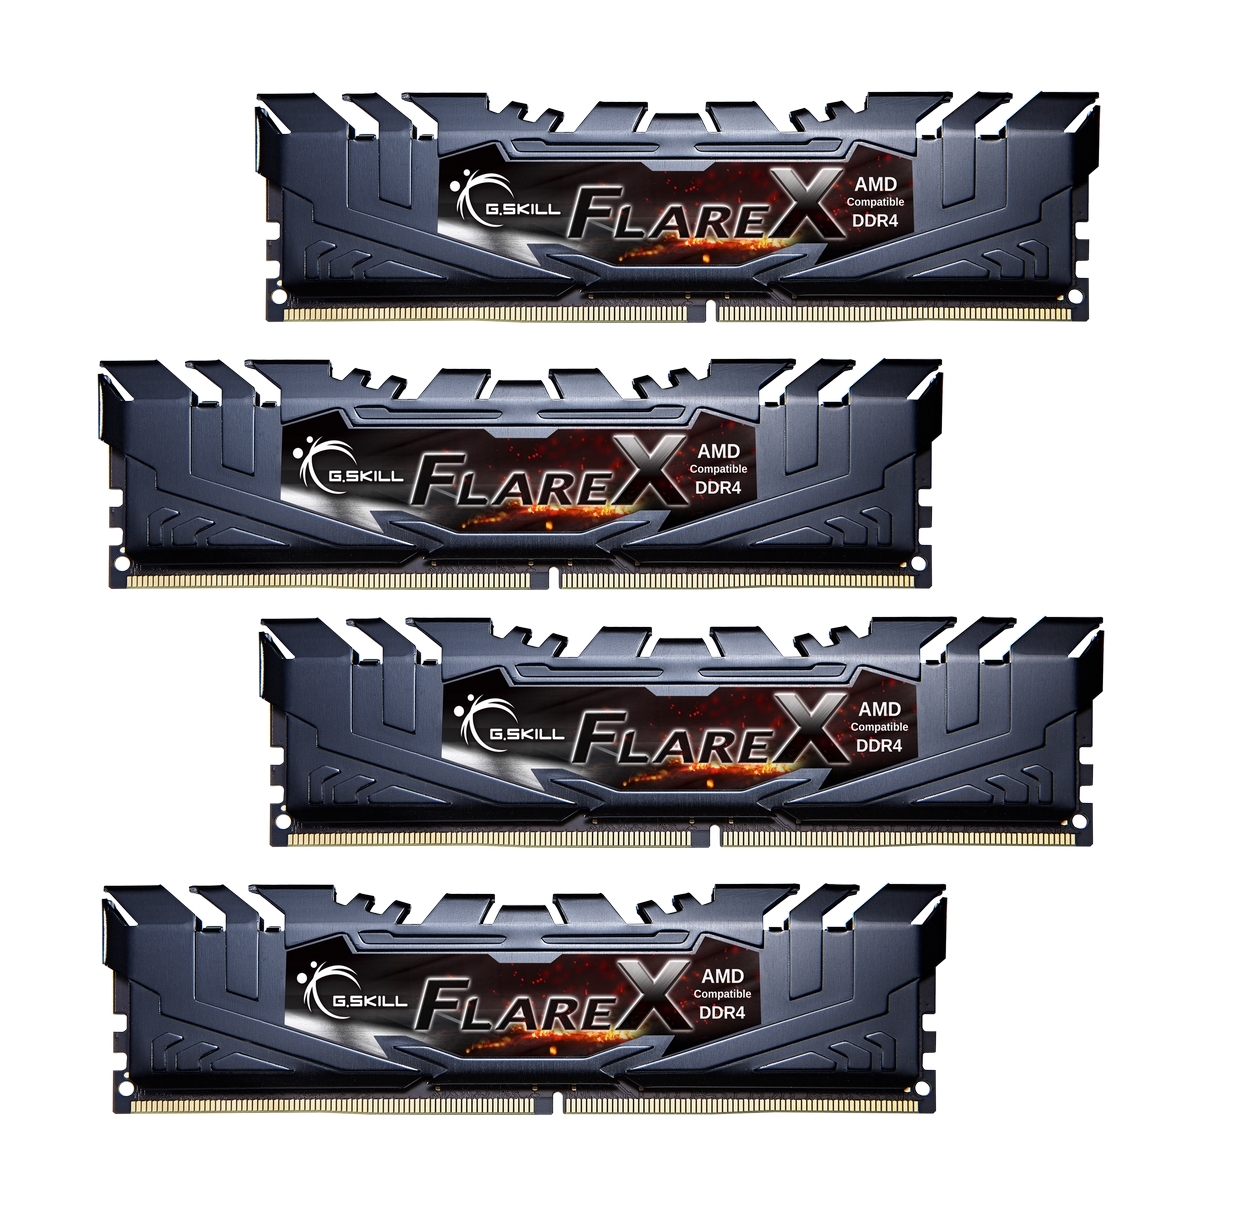 32GB G.Skill Flare X DDR4 3200MHz PC4-25600 for AMD Ryzen CL16 Quad Channel Kit (4x8GB)